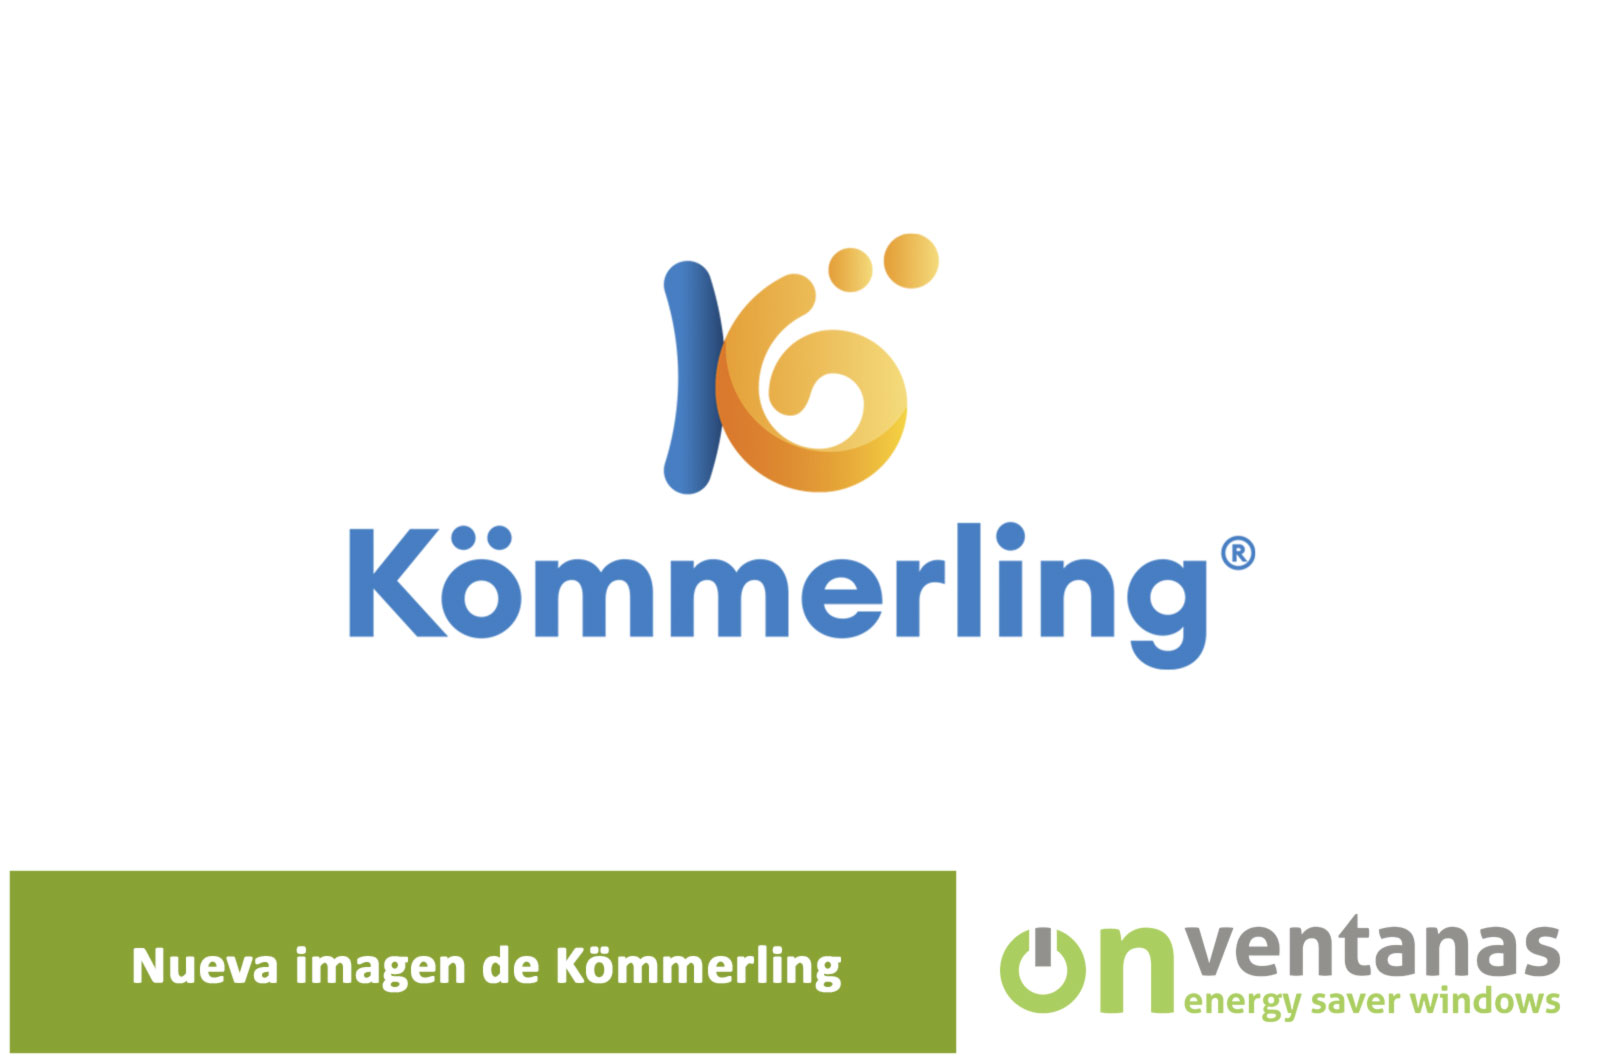 Nueva imagen Kömmerling